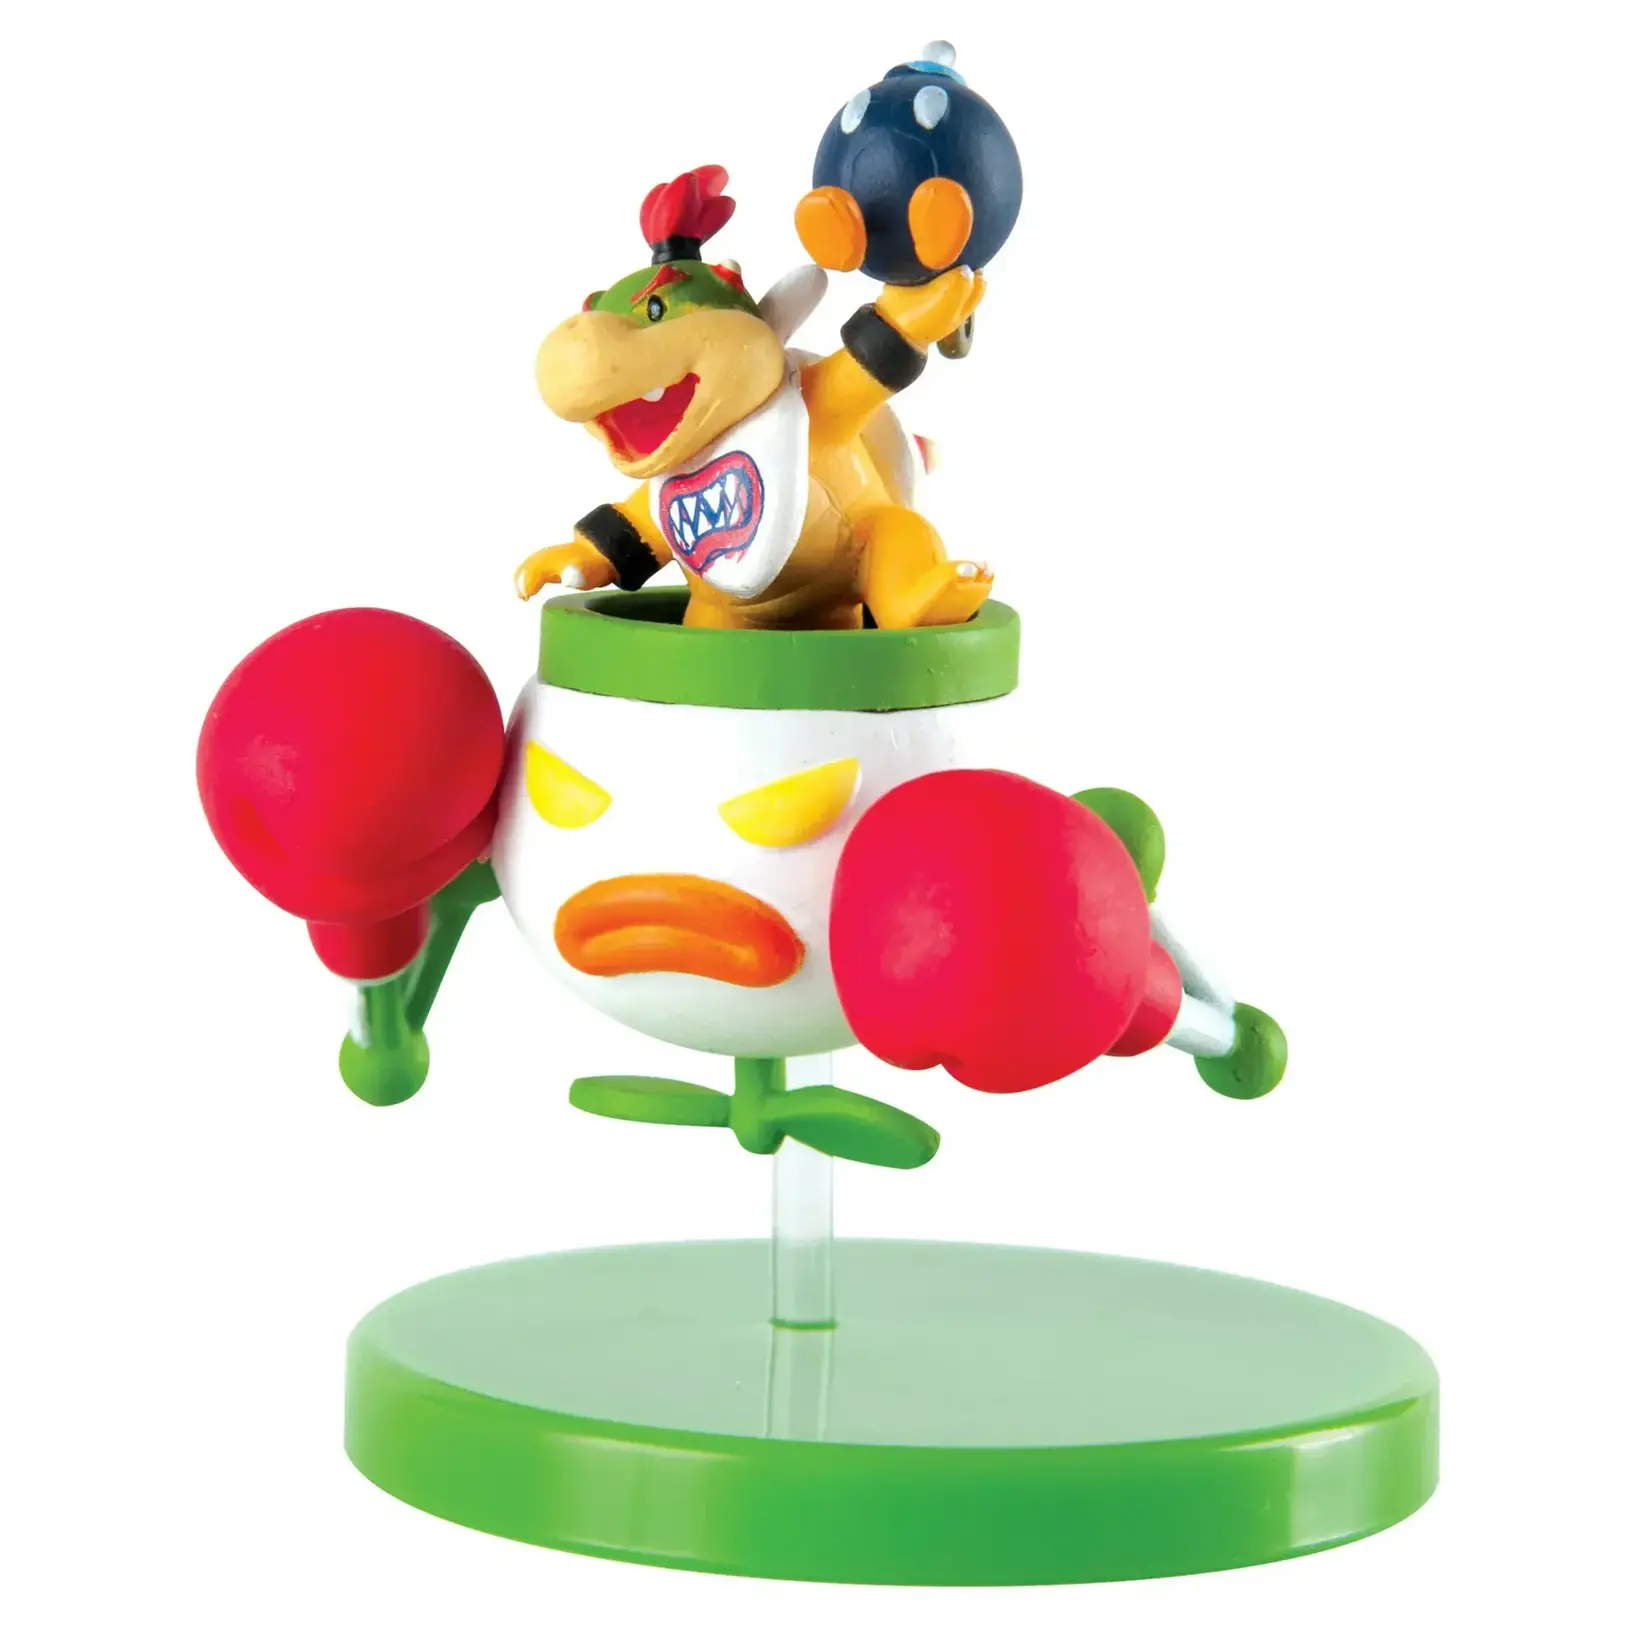 Bowser (Super Mario) – Destination figurines